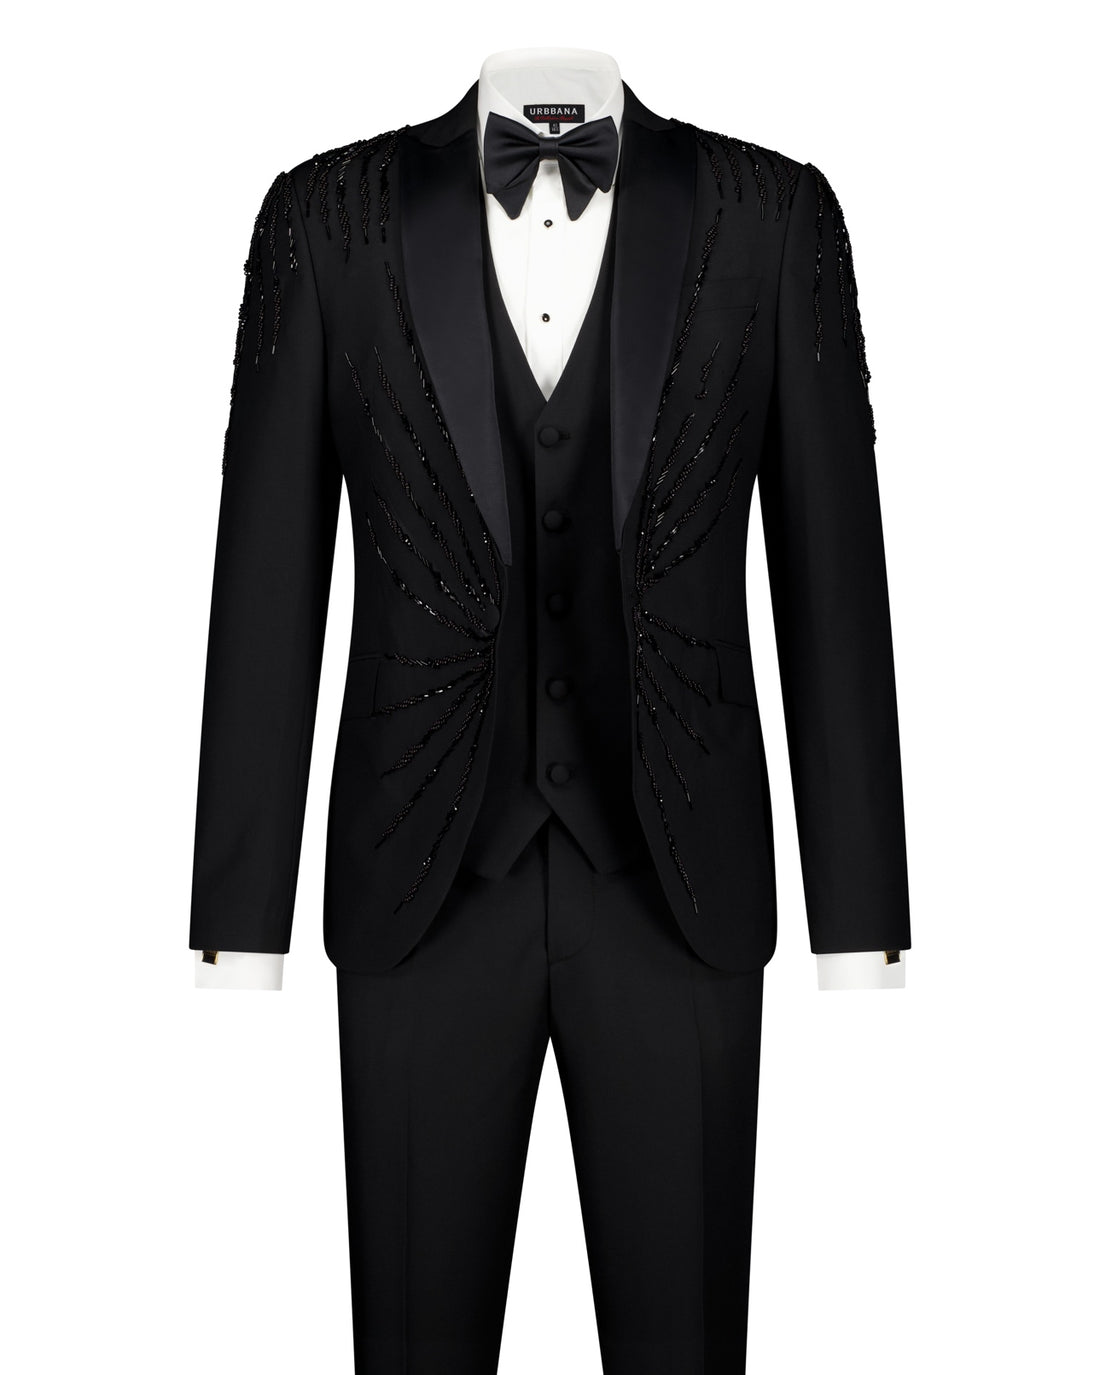 Recluse - Ceremony Suit